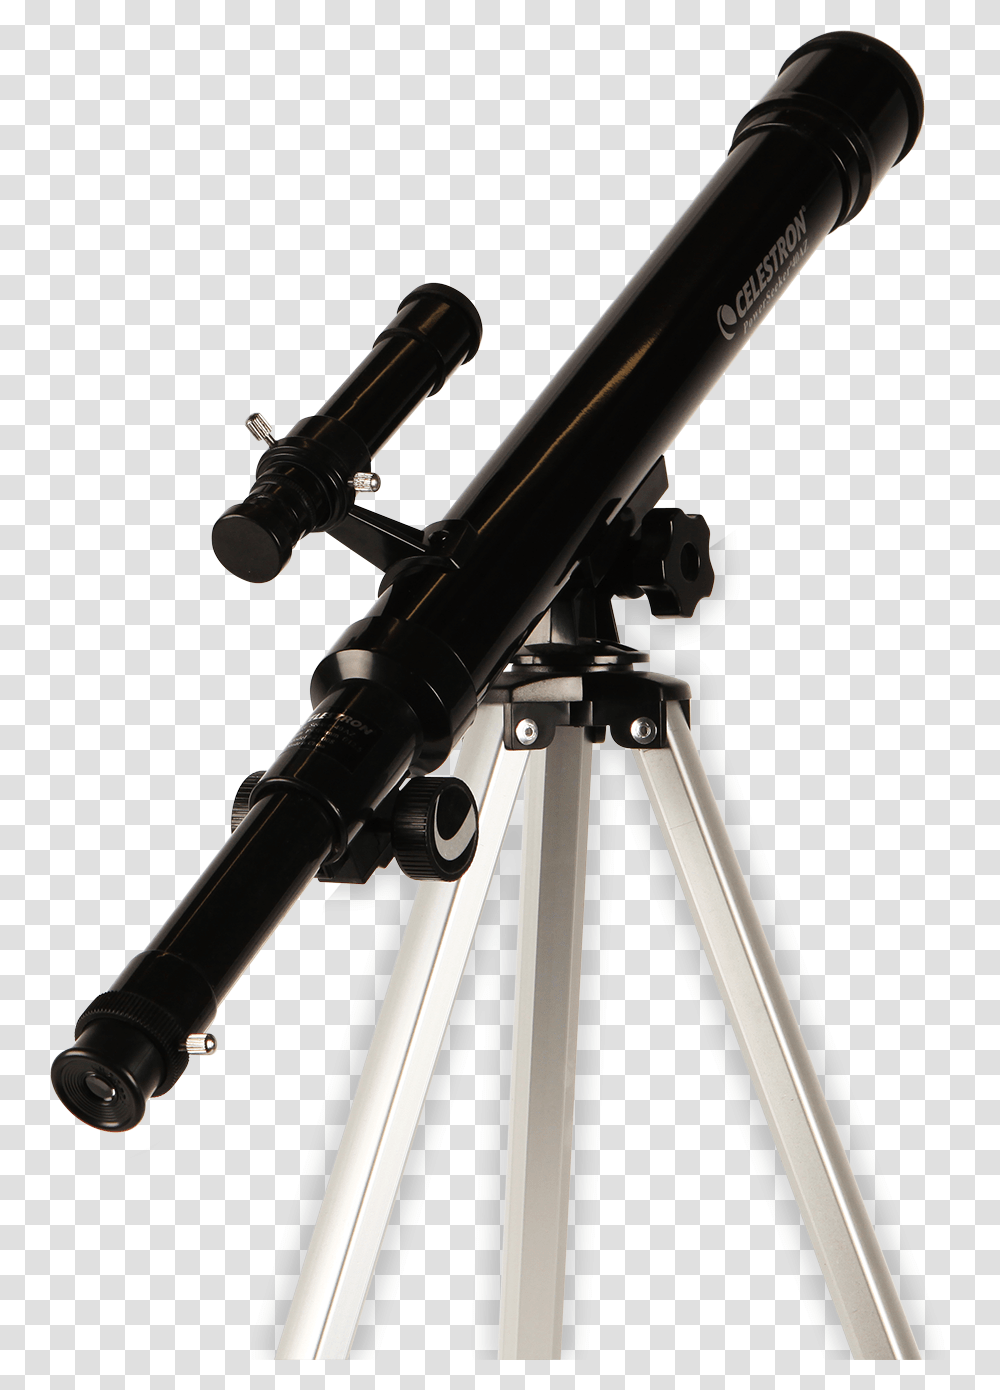 Celestron Powerseeker 40mm Telescope Celestron Telescope, Tripod, Bicycle, Vehicle, Transportation Transparent Png